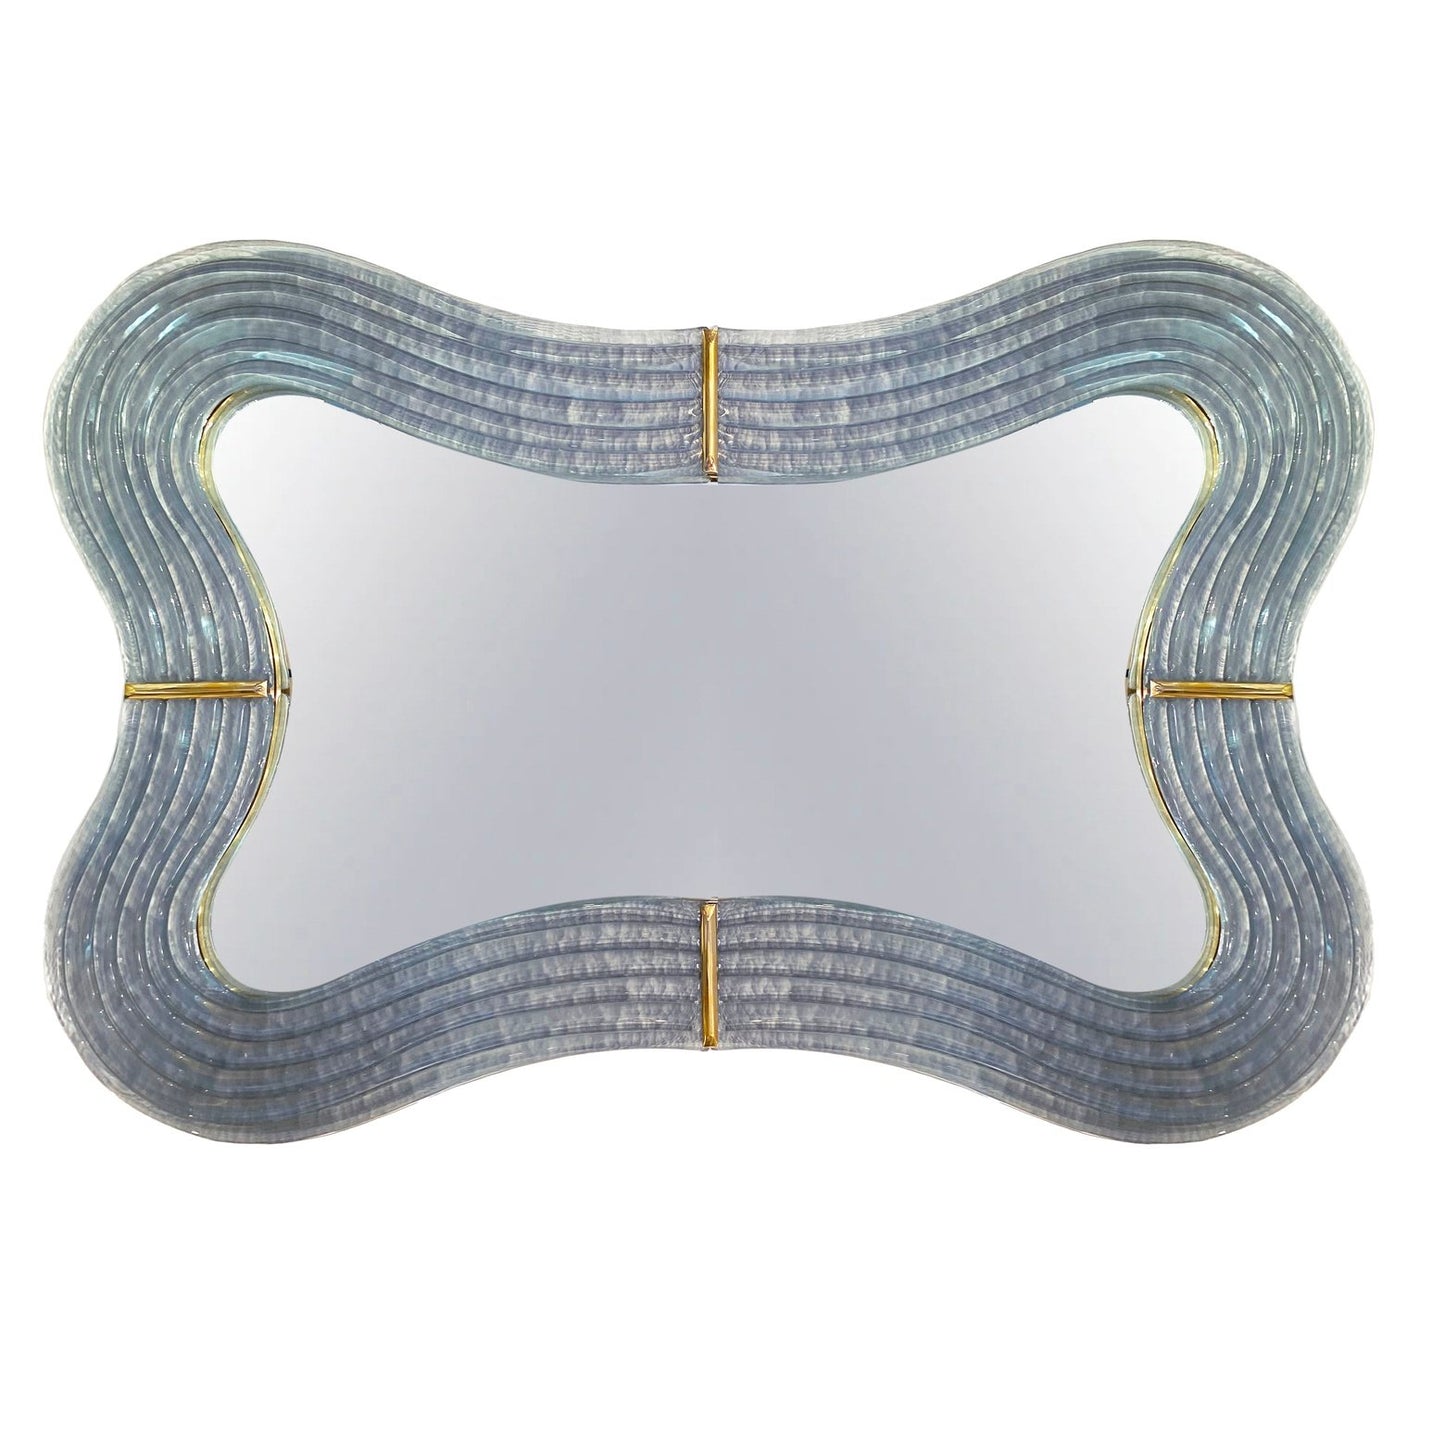 Contemporary Italian Pearl Gray Blue Murano Glass Curved Mirror & Brass Accents